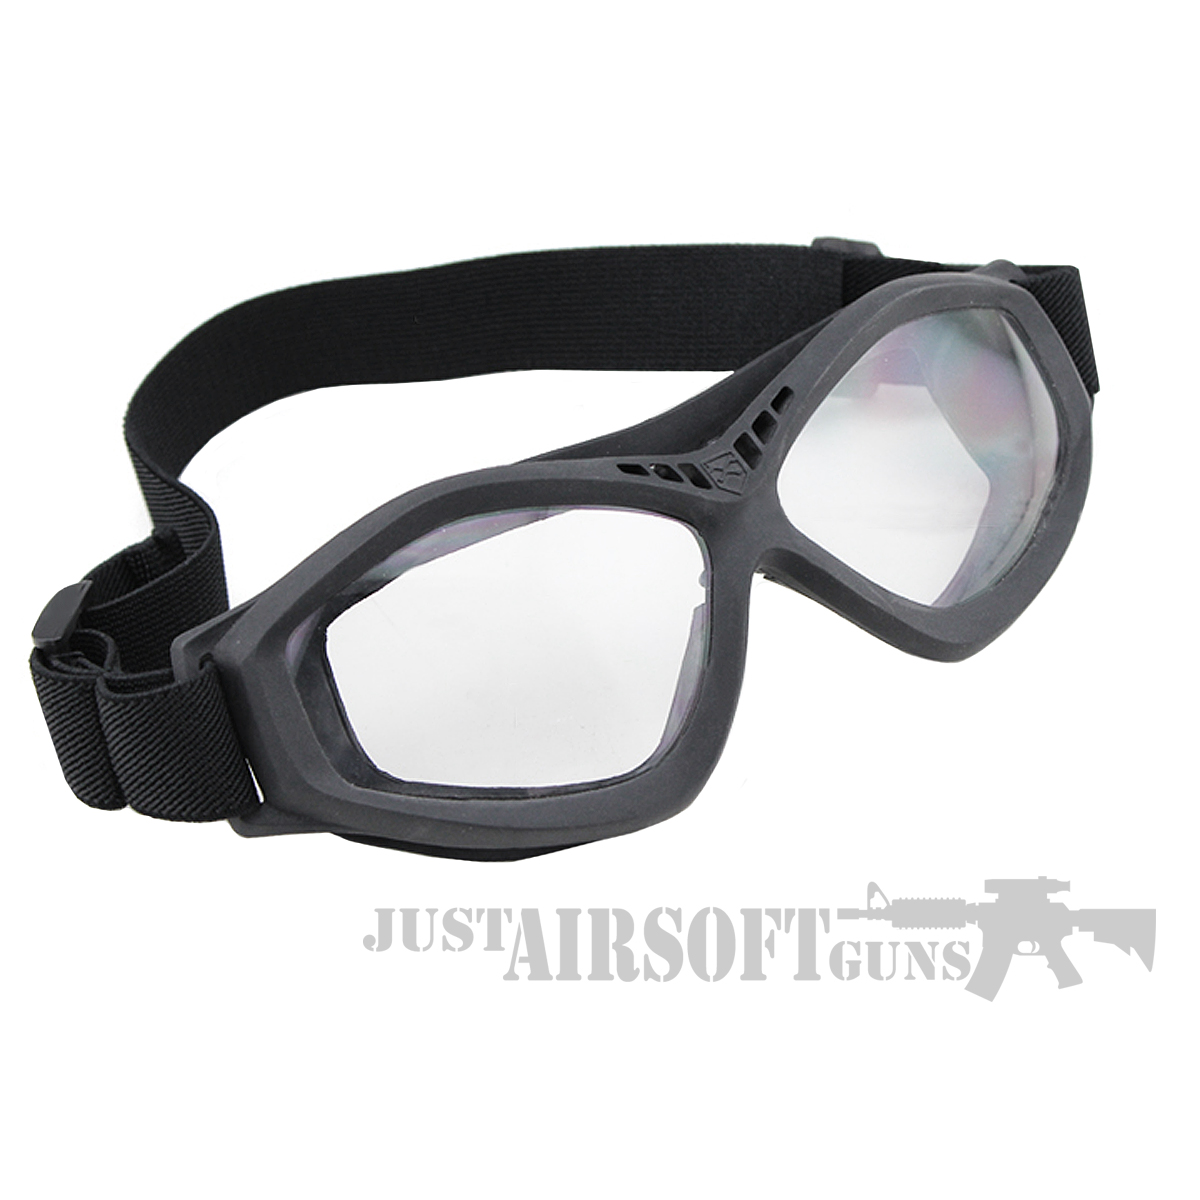 wosport goggles black 1